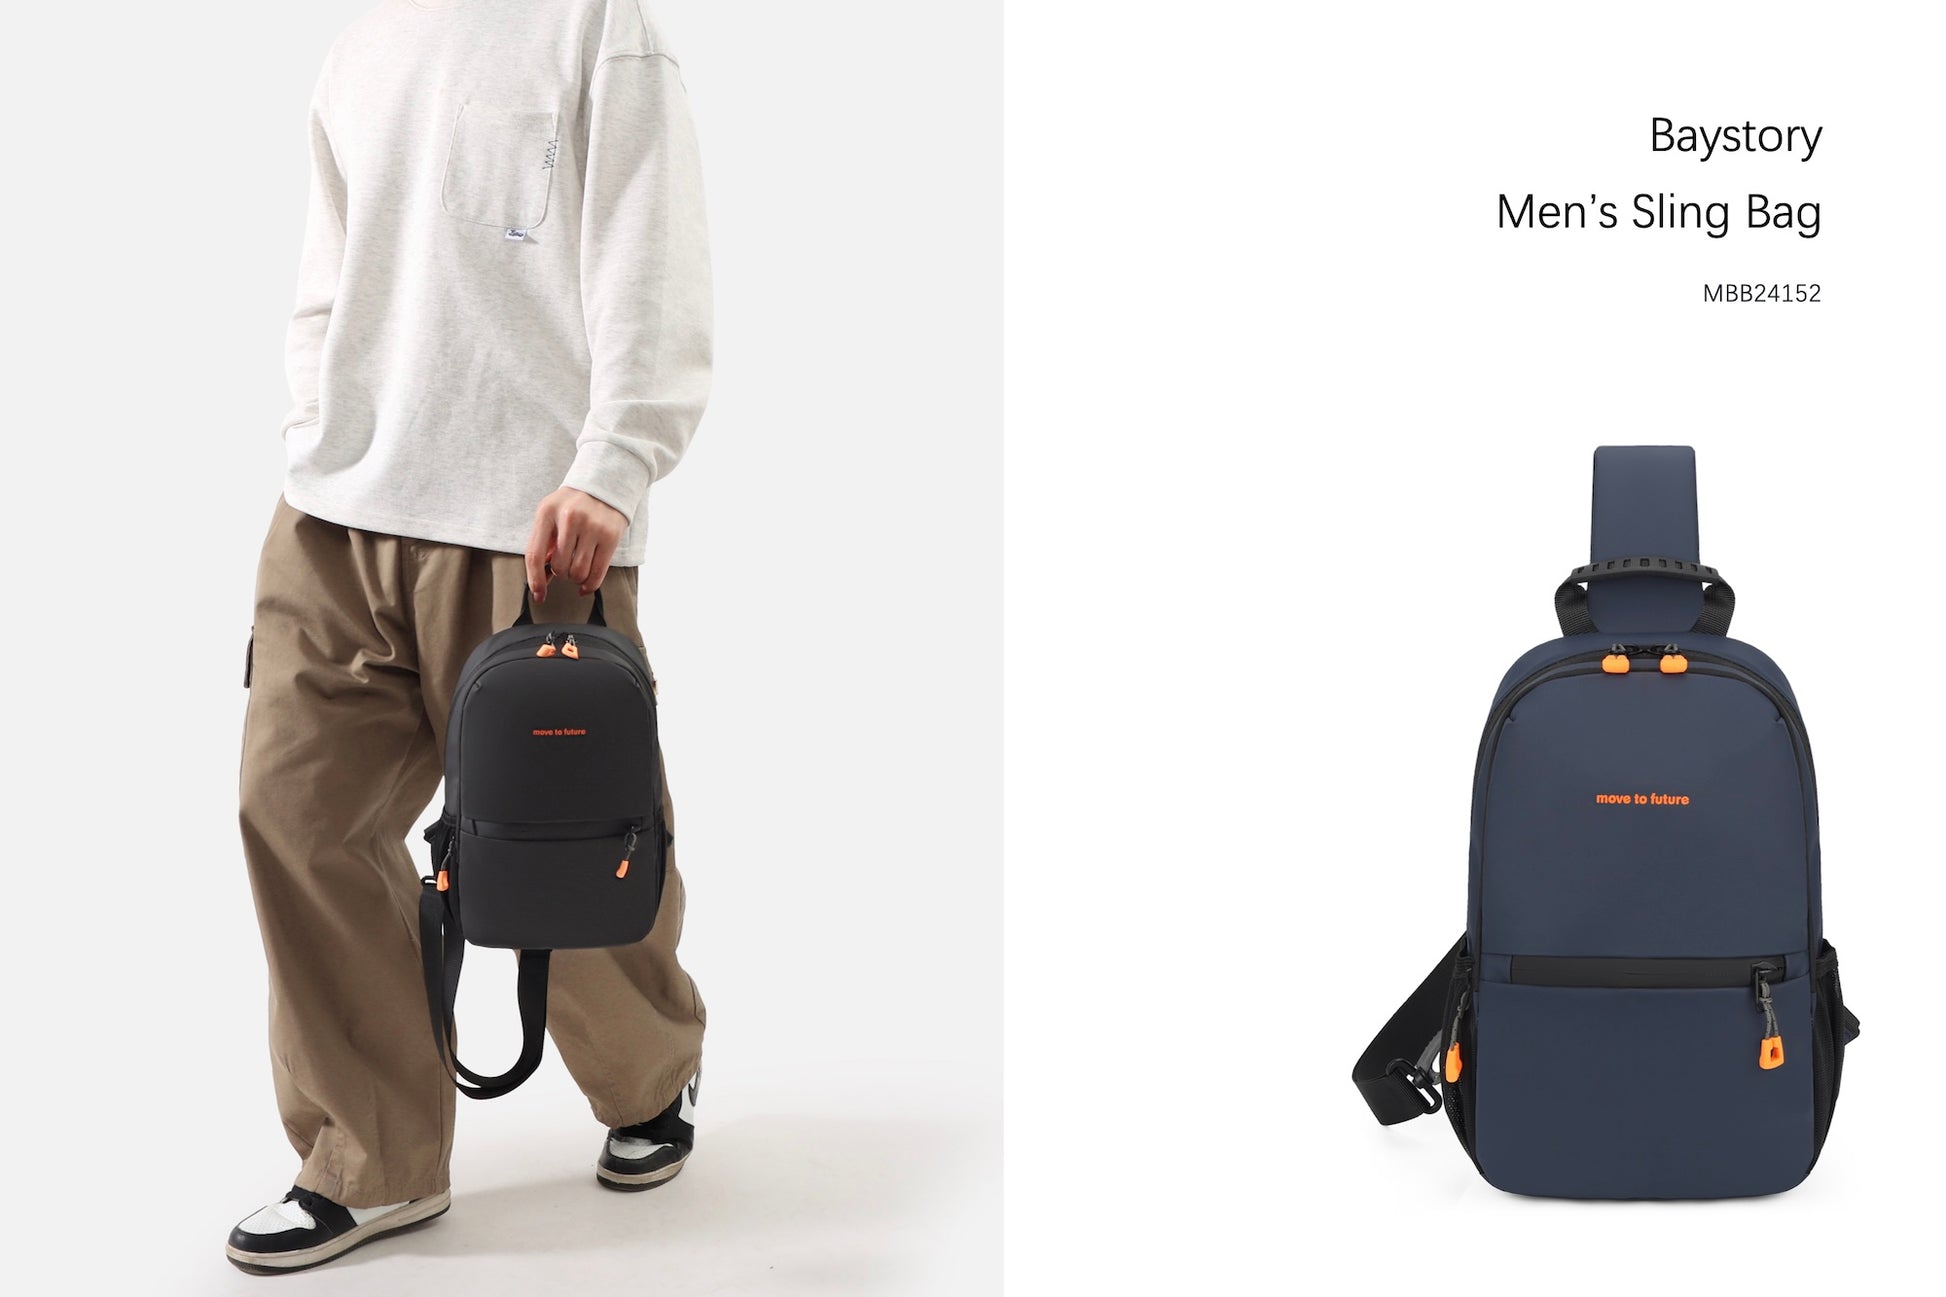 Men's Sling Bag MBB24152 - Baystory